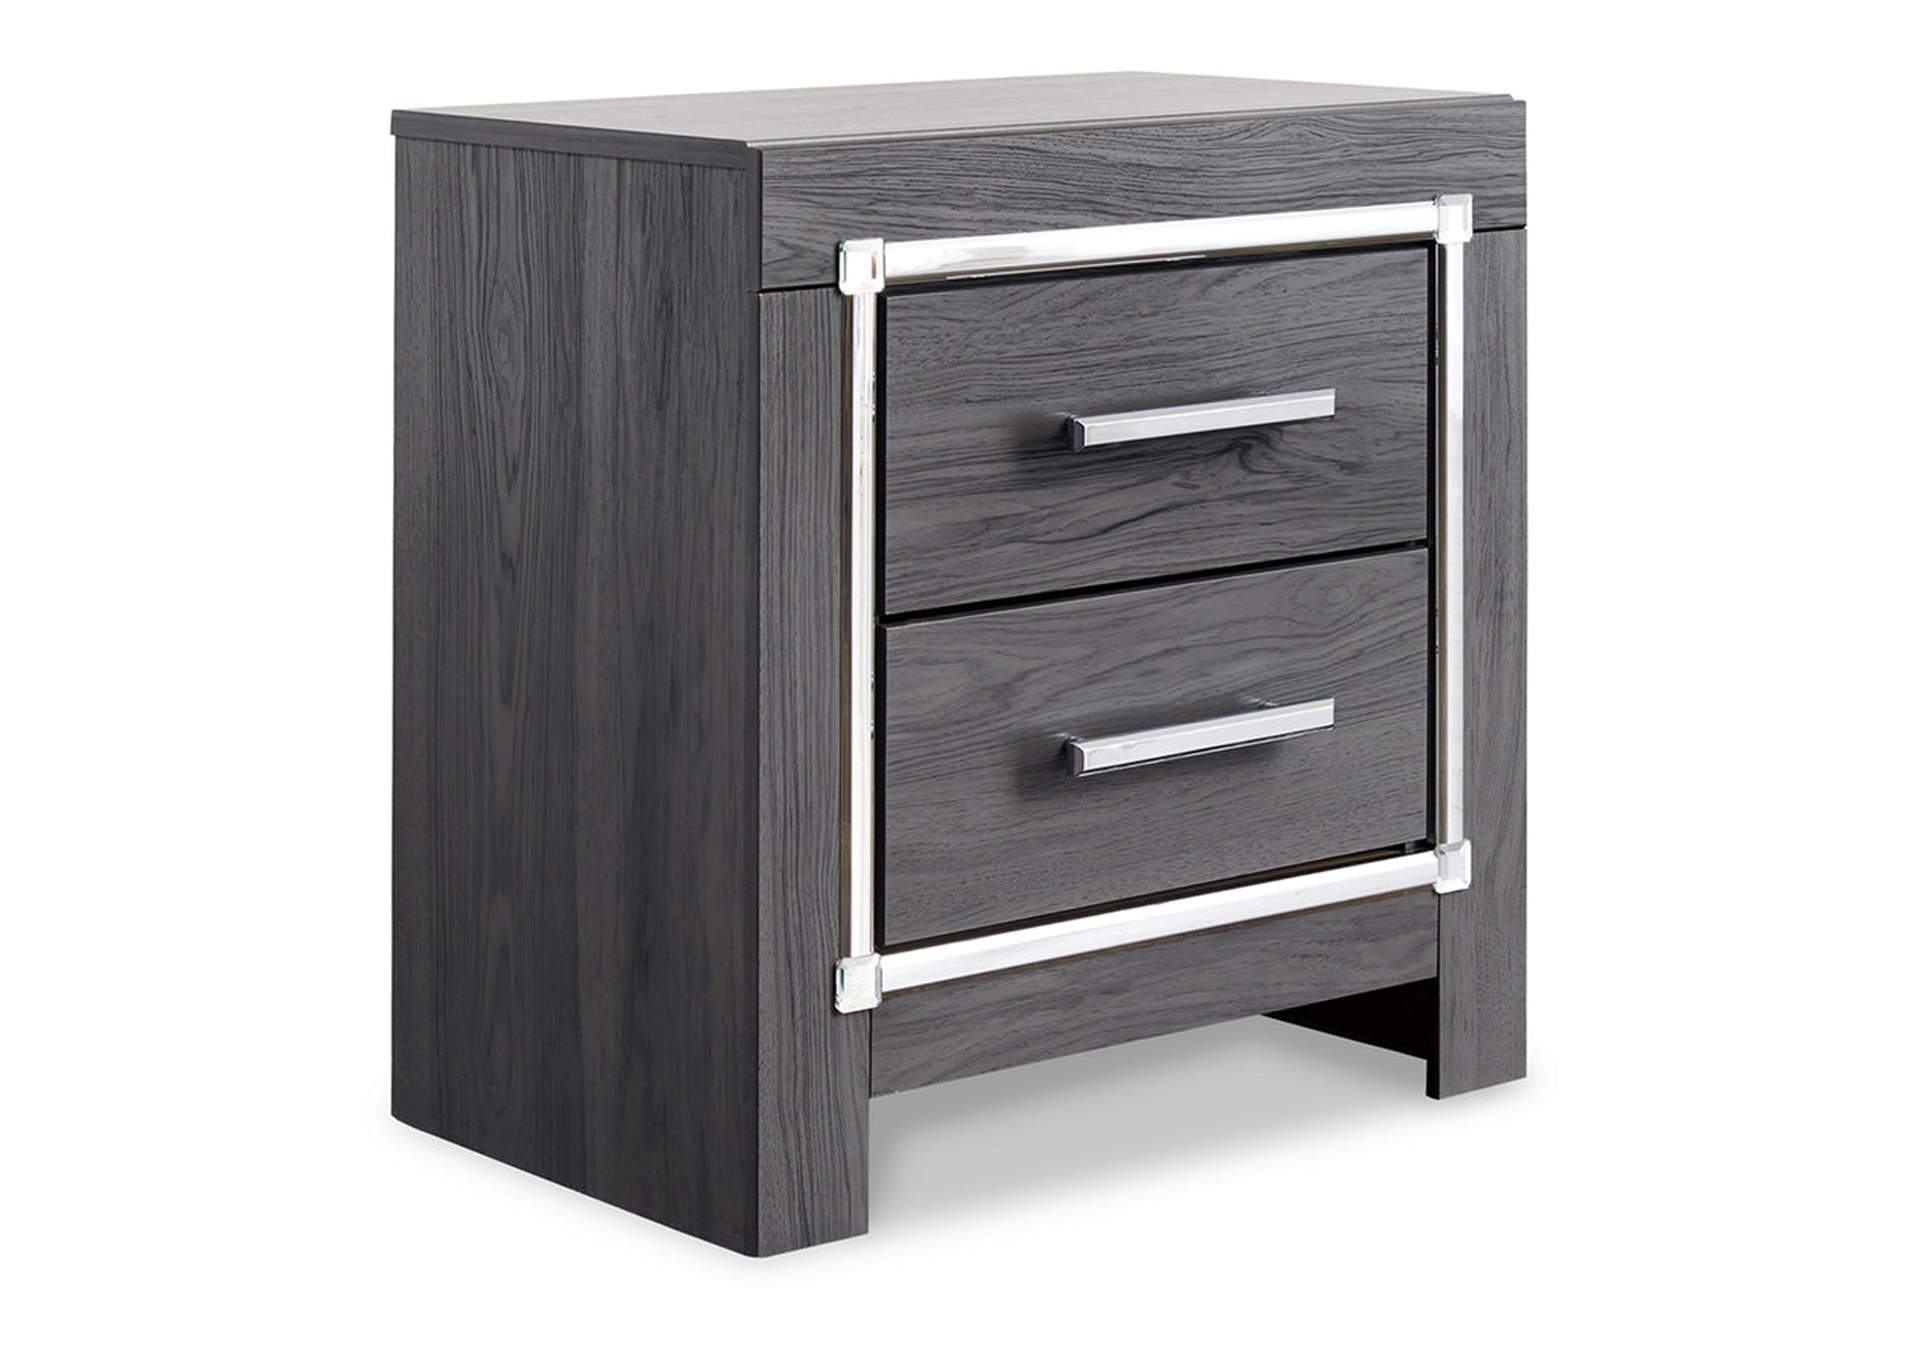 Lodanna Queen Panel Storage Bed, Dresser, Mirror, Chest and Nightstand,Signature Design By Ashley